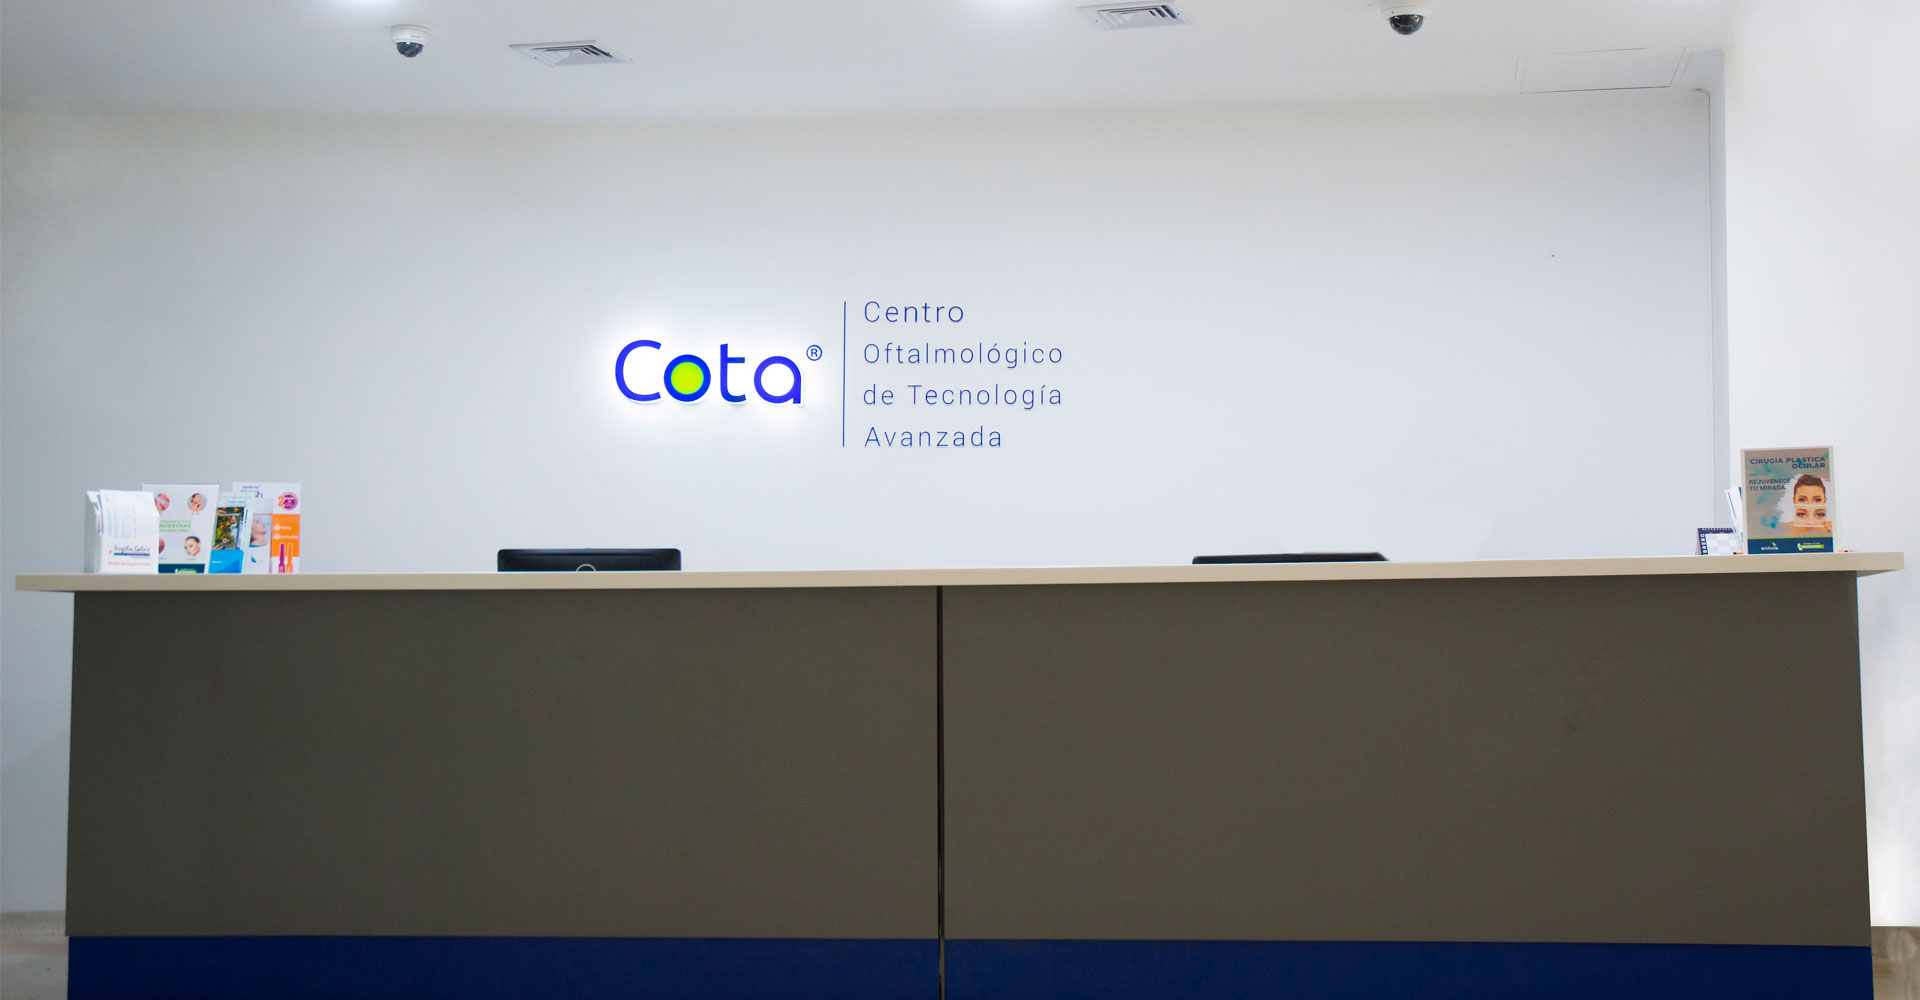 COTA Centro Oftalmologico de Tecnologia Avanzada